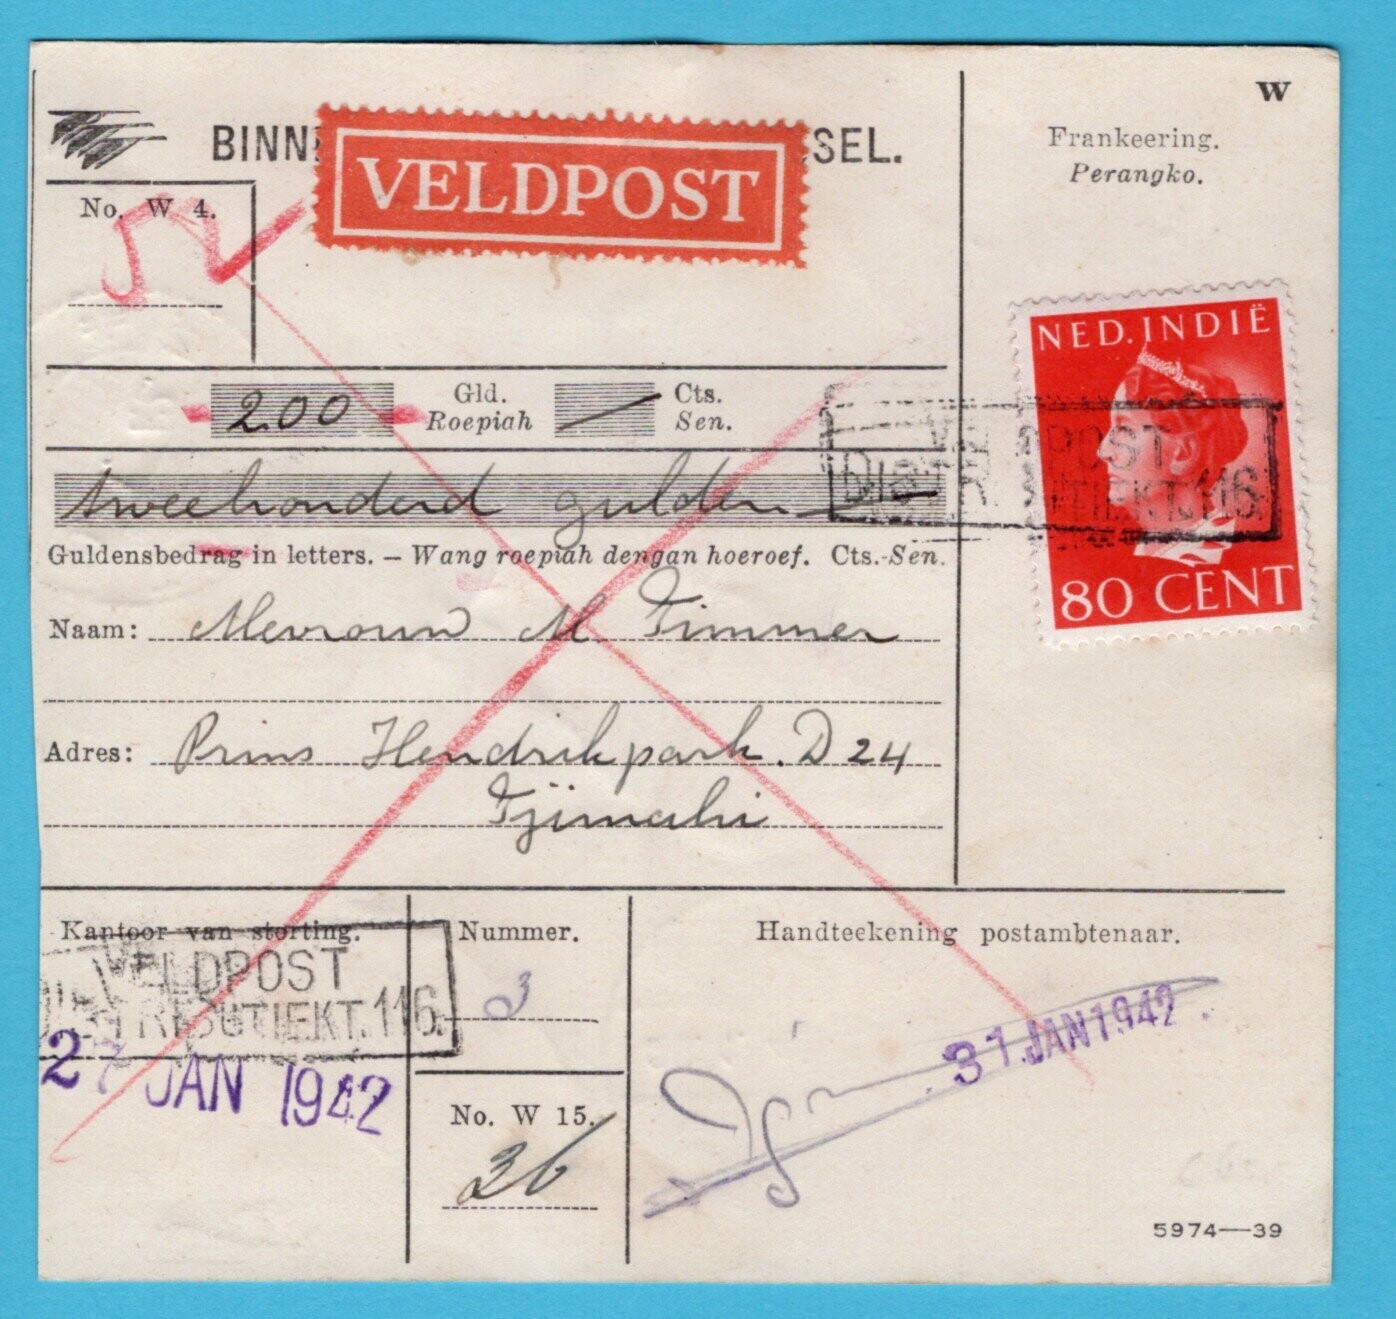 NETHERLANDS EAST INDIES postal mandate 1942 FPO116